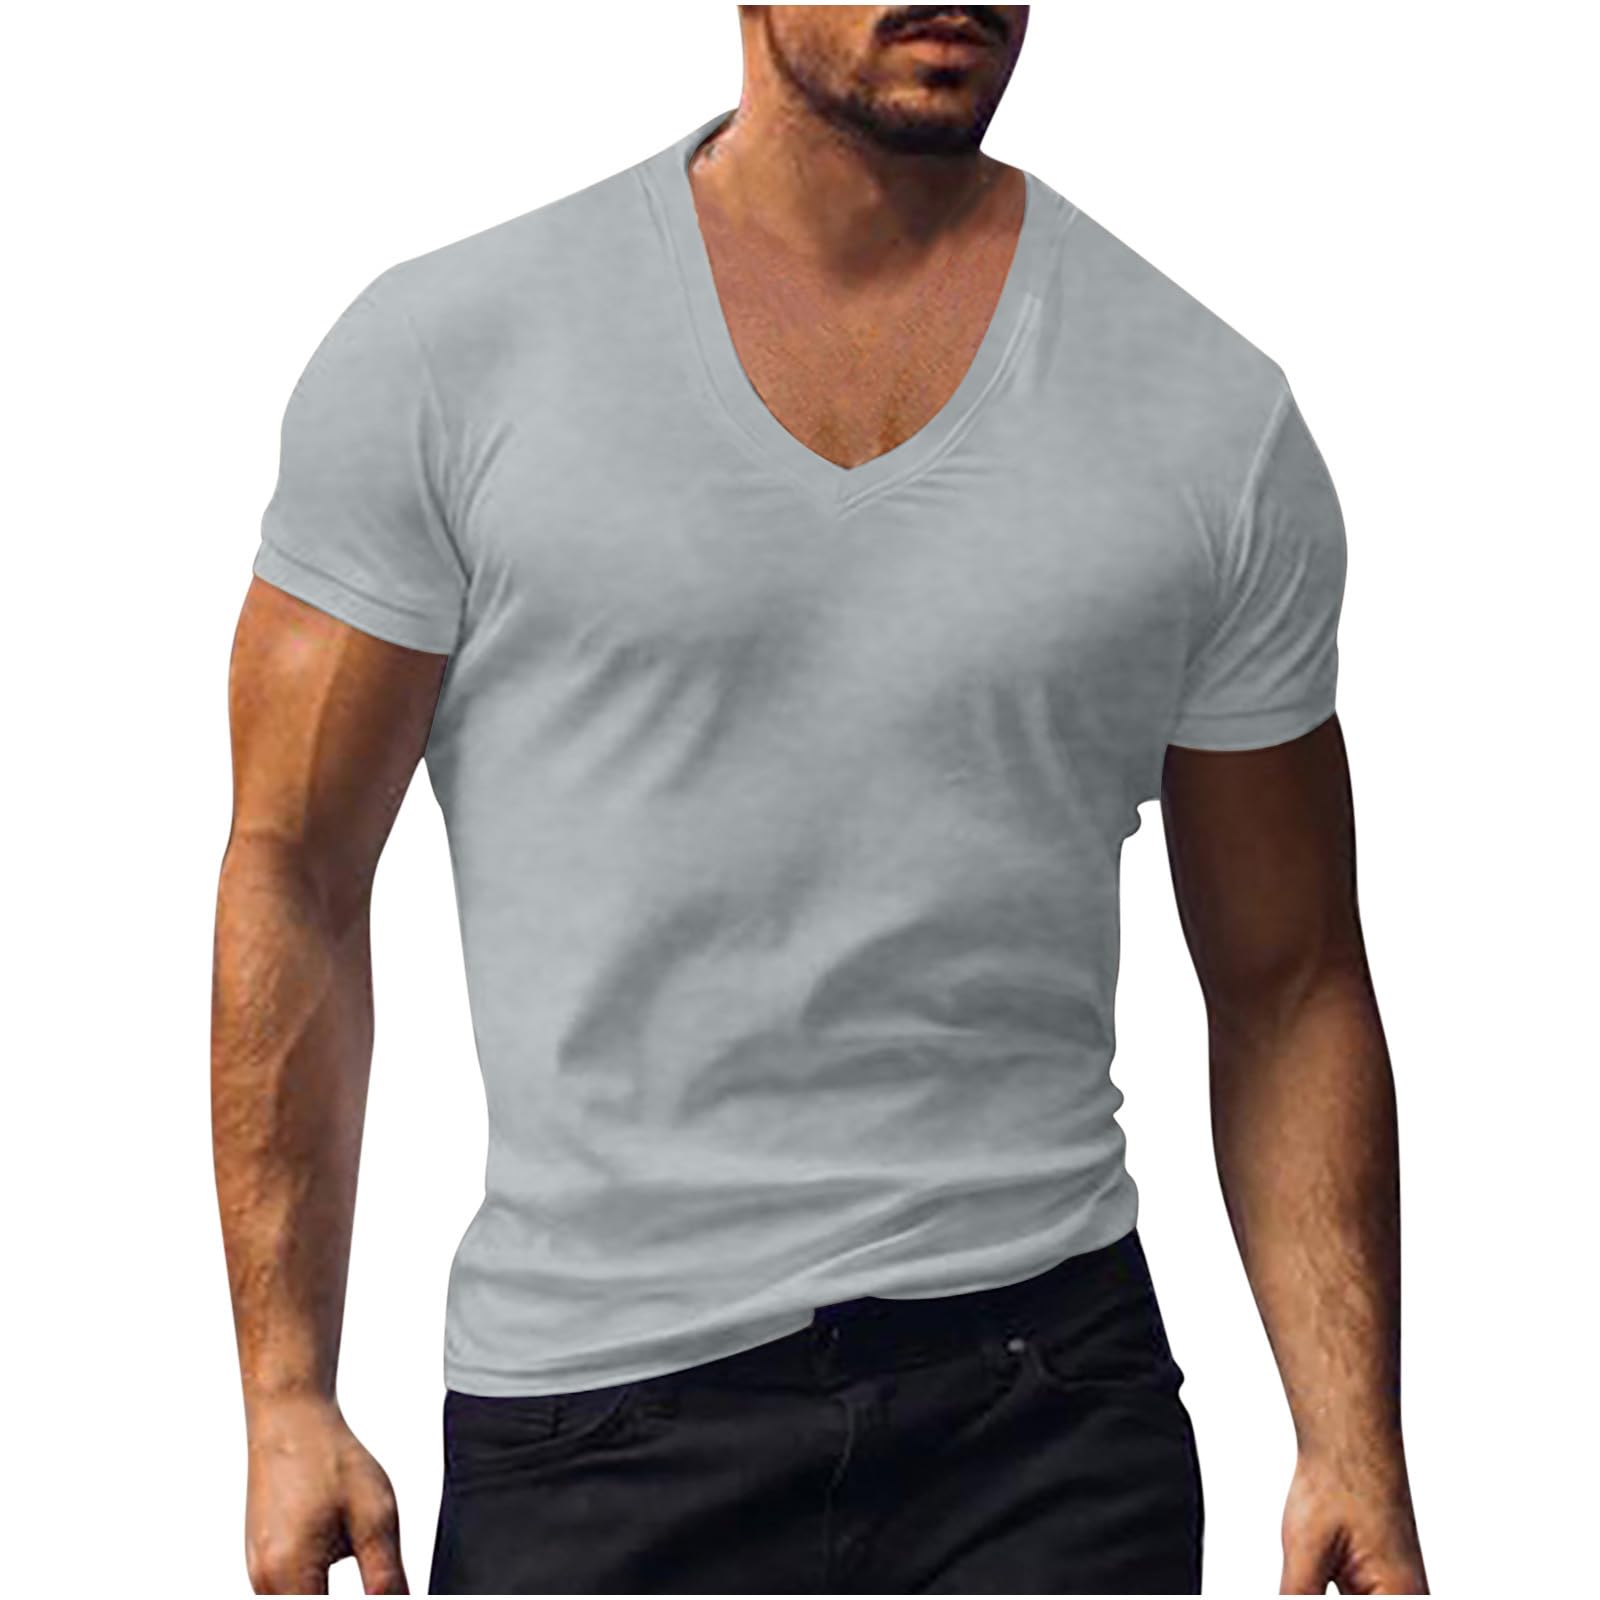  Workout Shirts for Men, V Neck Muscle Tees Short